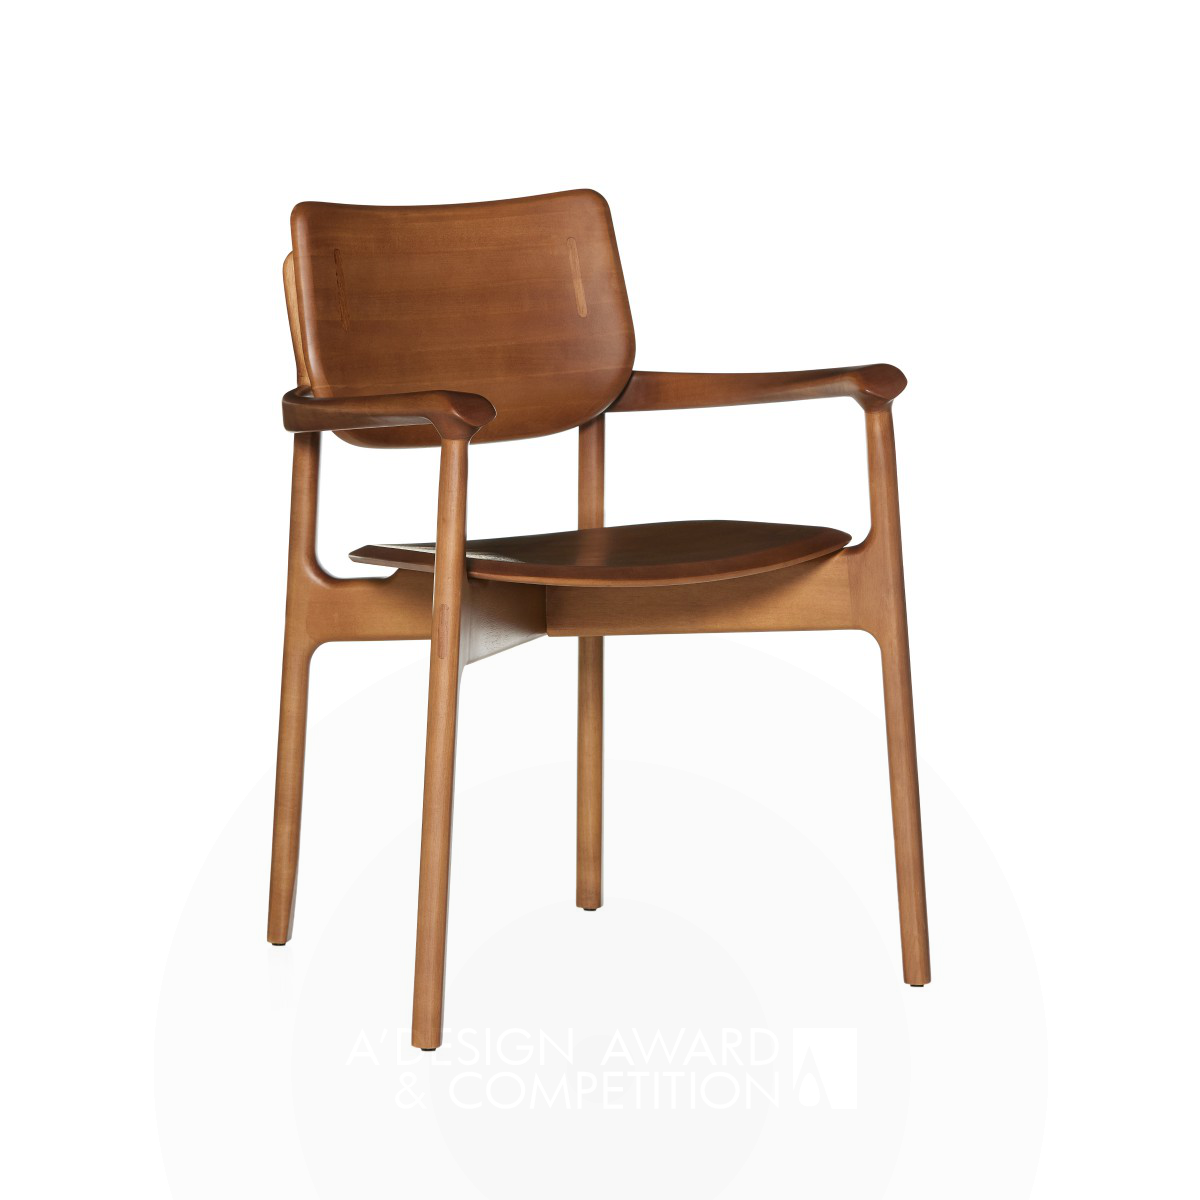 Alexandre Kasper wins Silver at the prestigious A' Furniture Design Award with Zeh Chair.